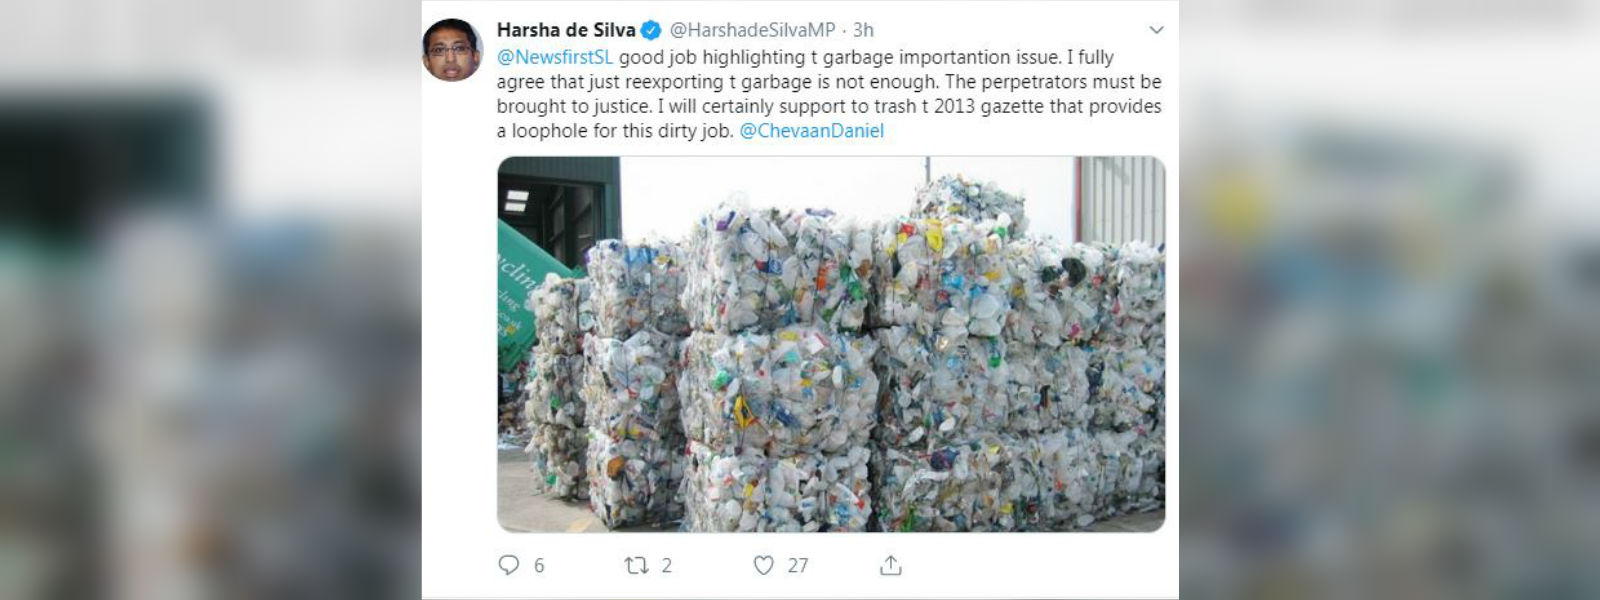 Harsha de Silva supports to return garbage 